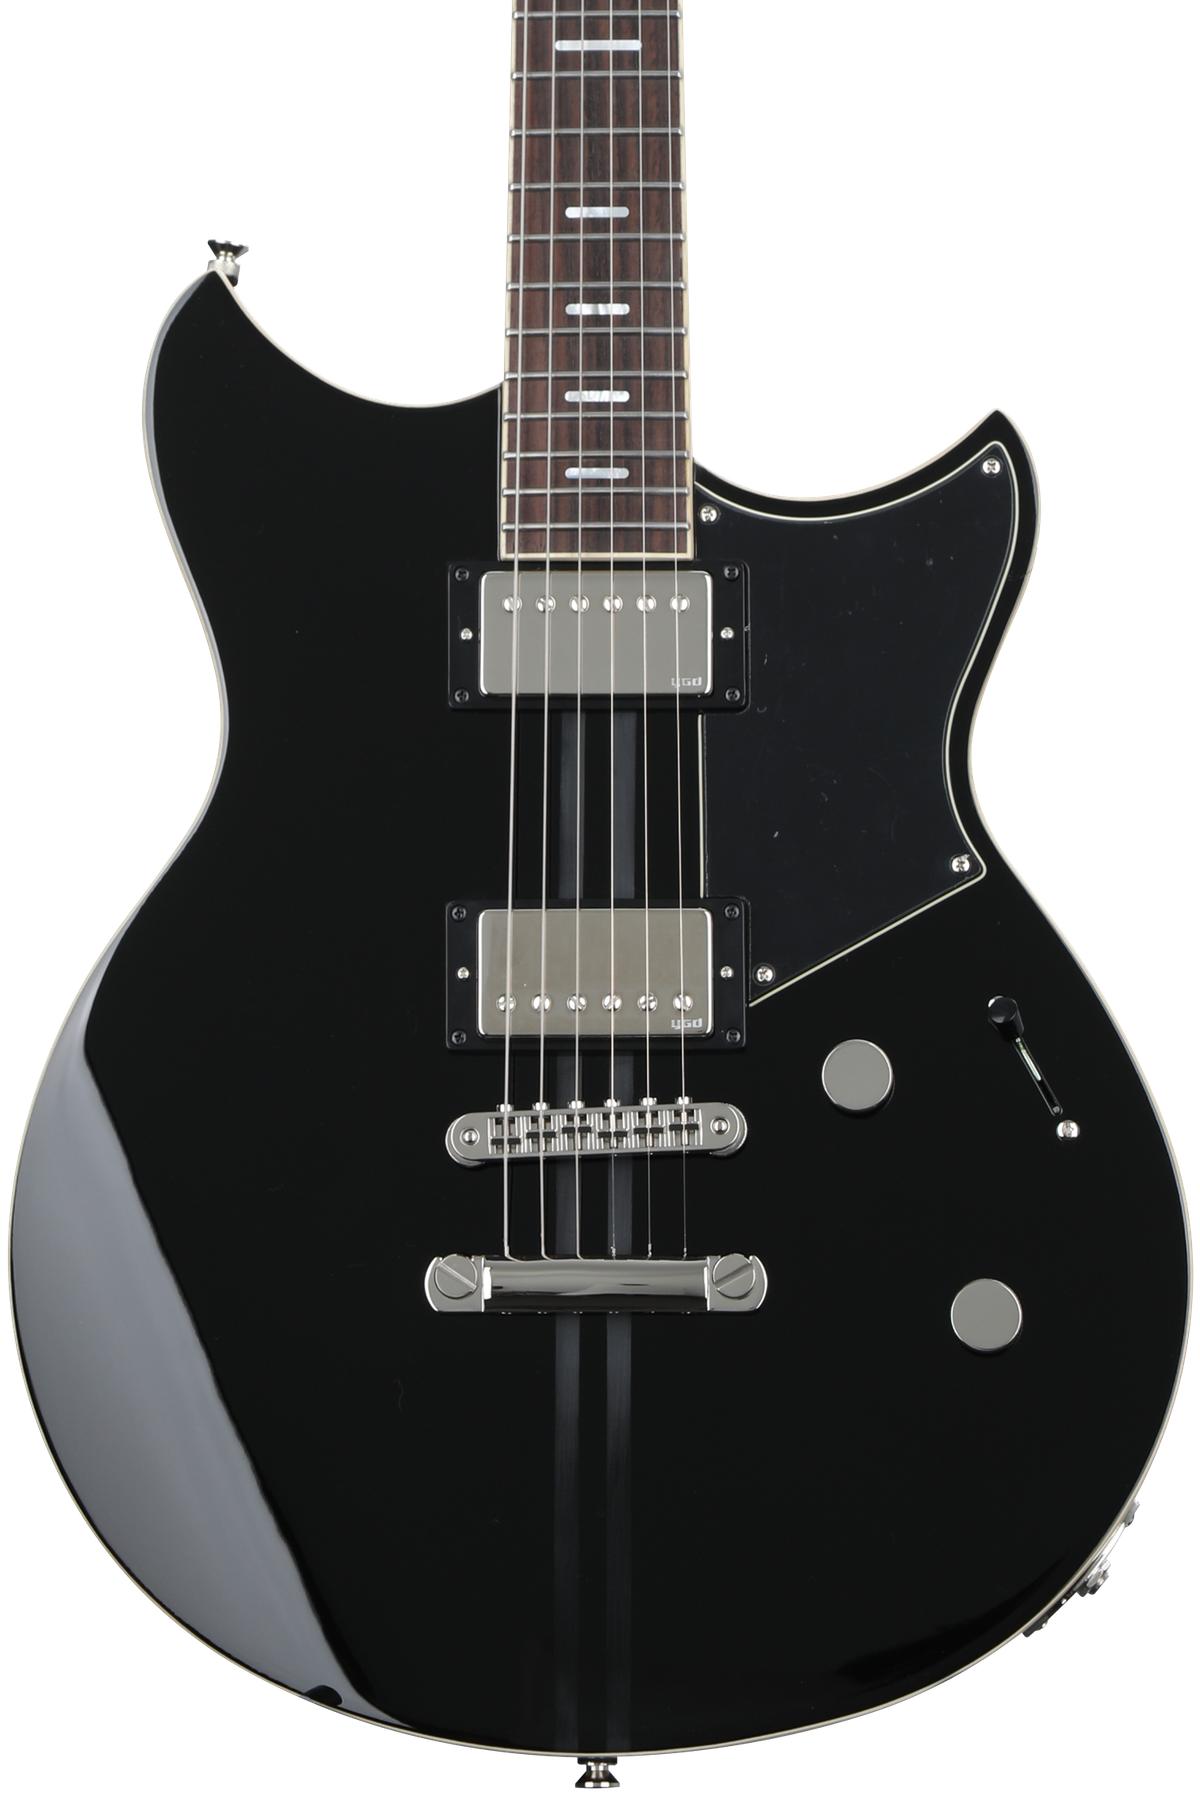 Yamaha Revstar Standard RSS20 Electric Guitar - Black | Sweetwater